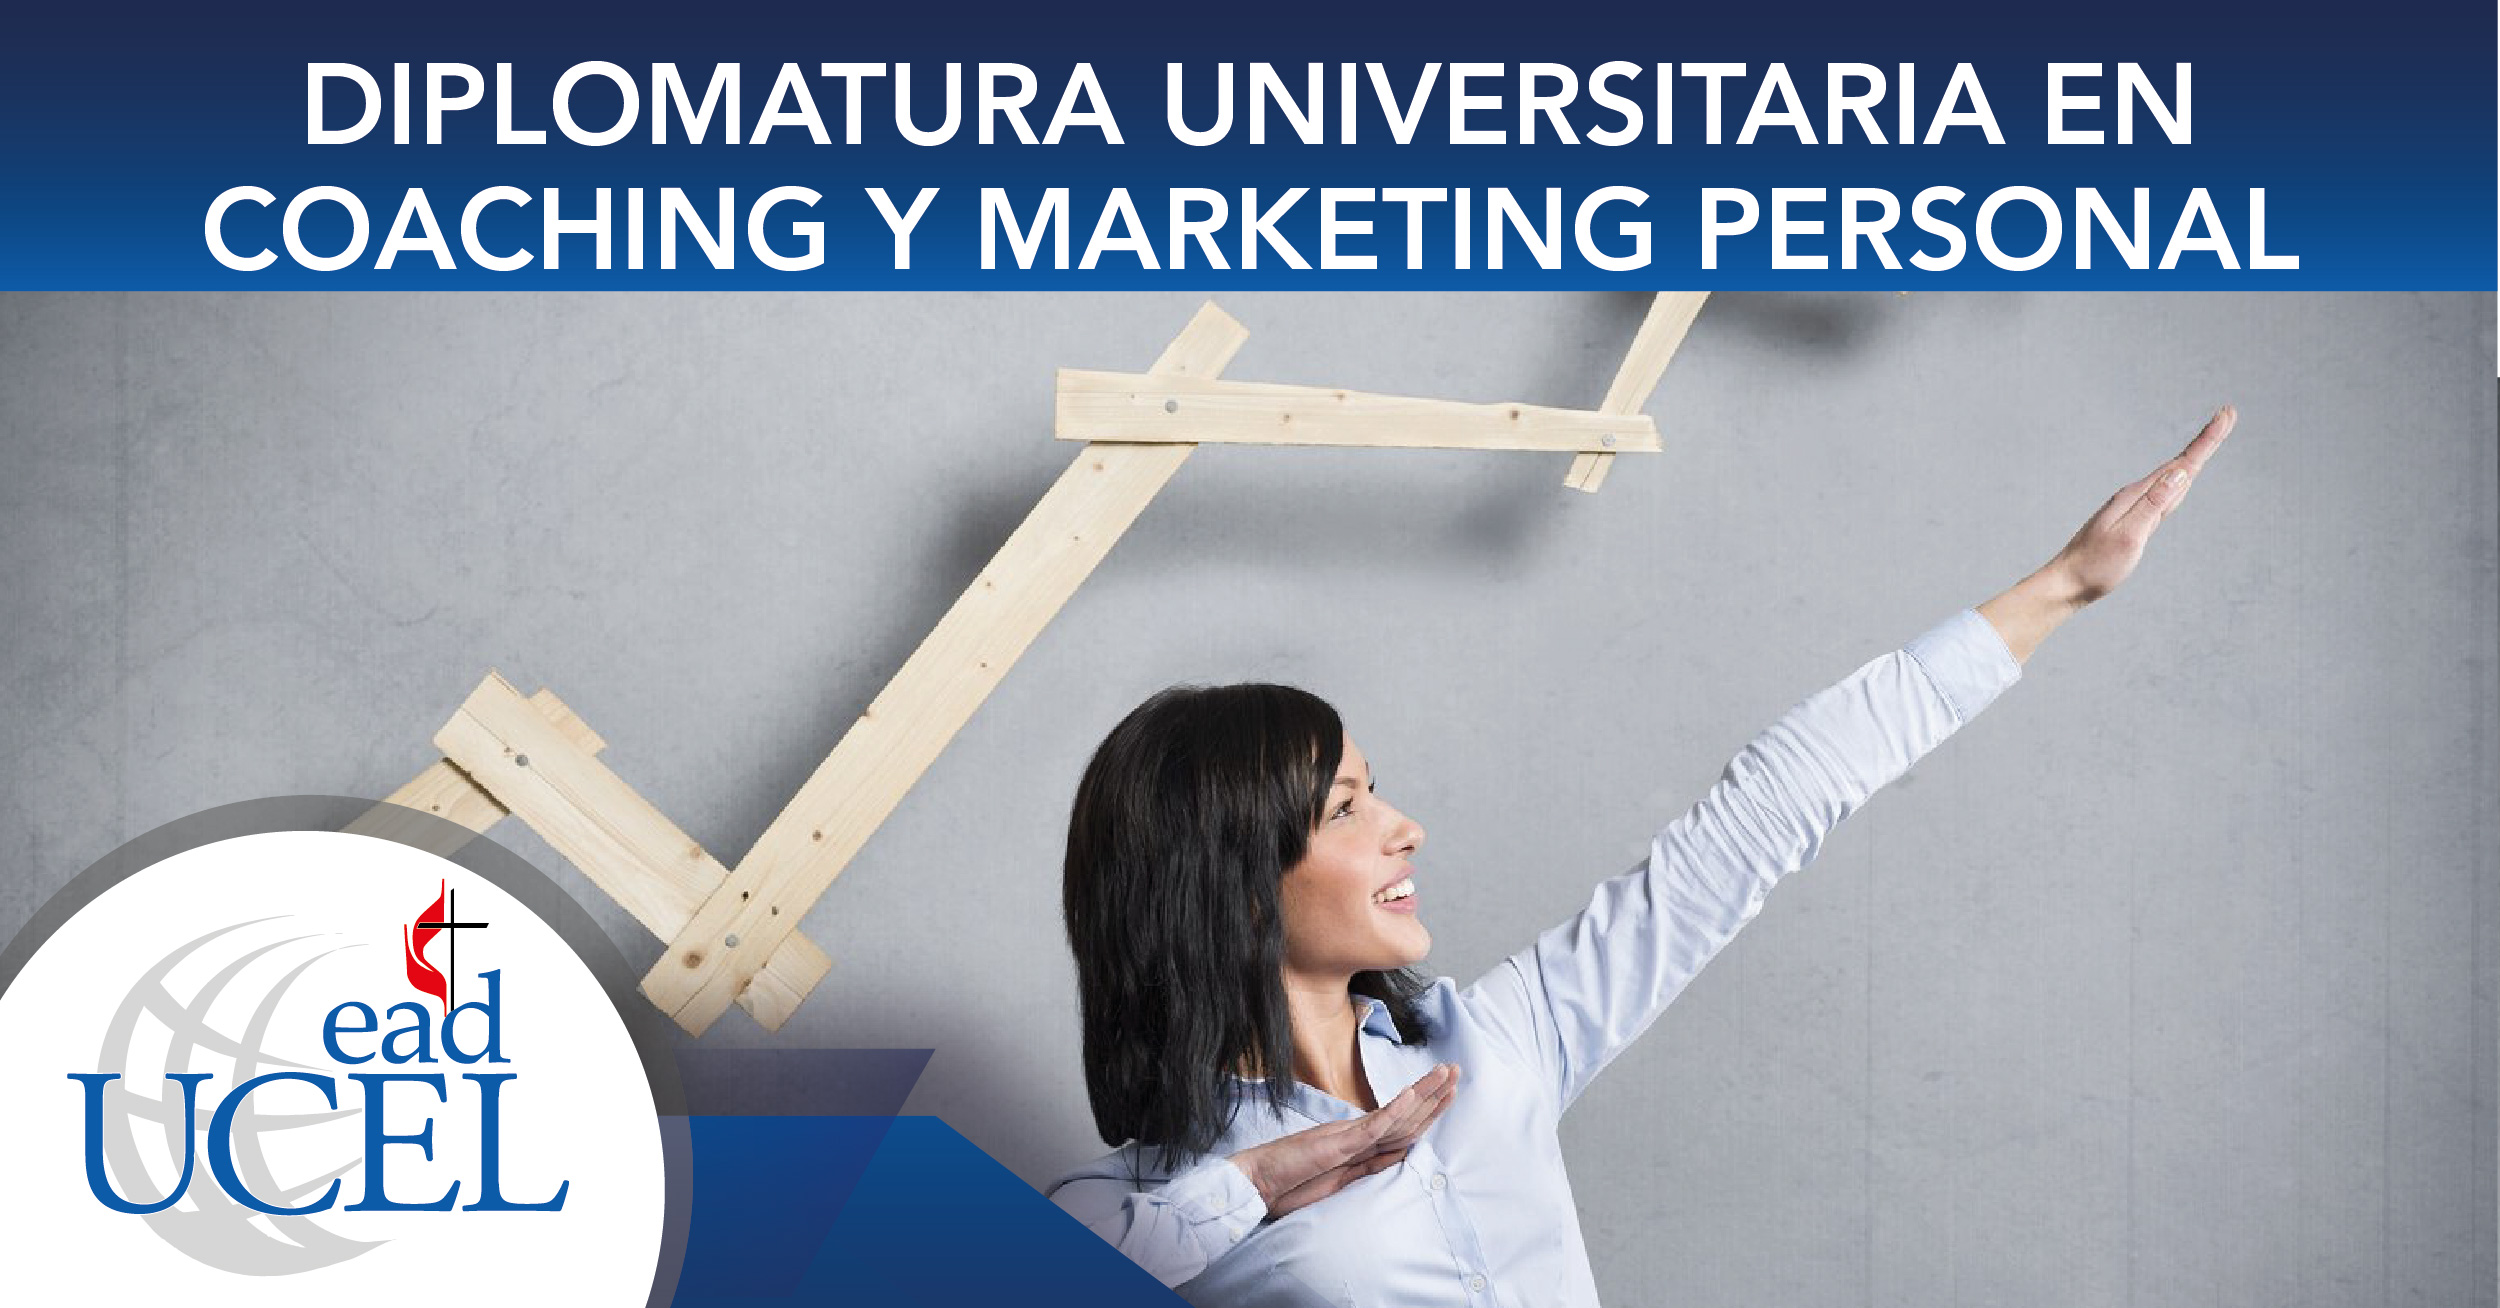 Diplomatura Universitaria en Coaching y Marketing Personal 2019 02